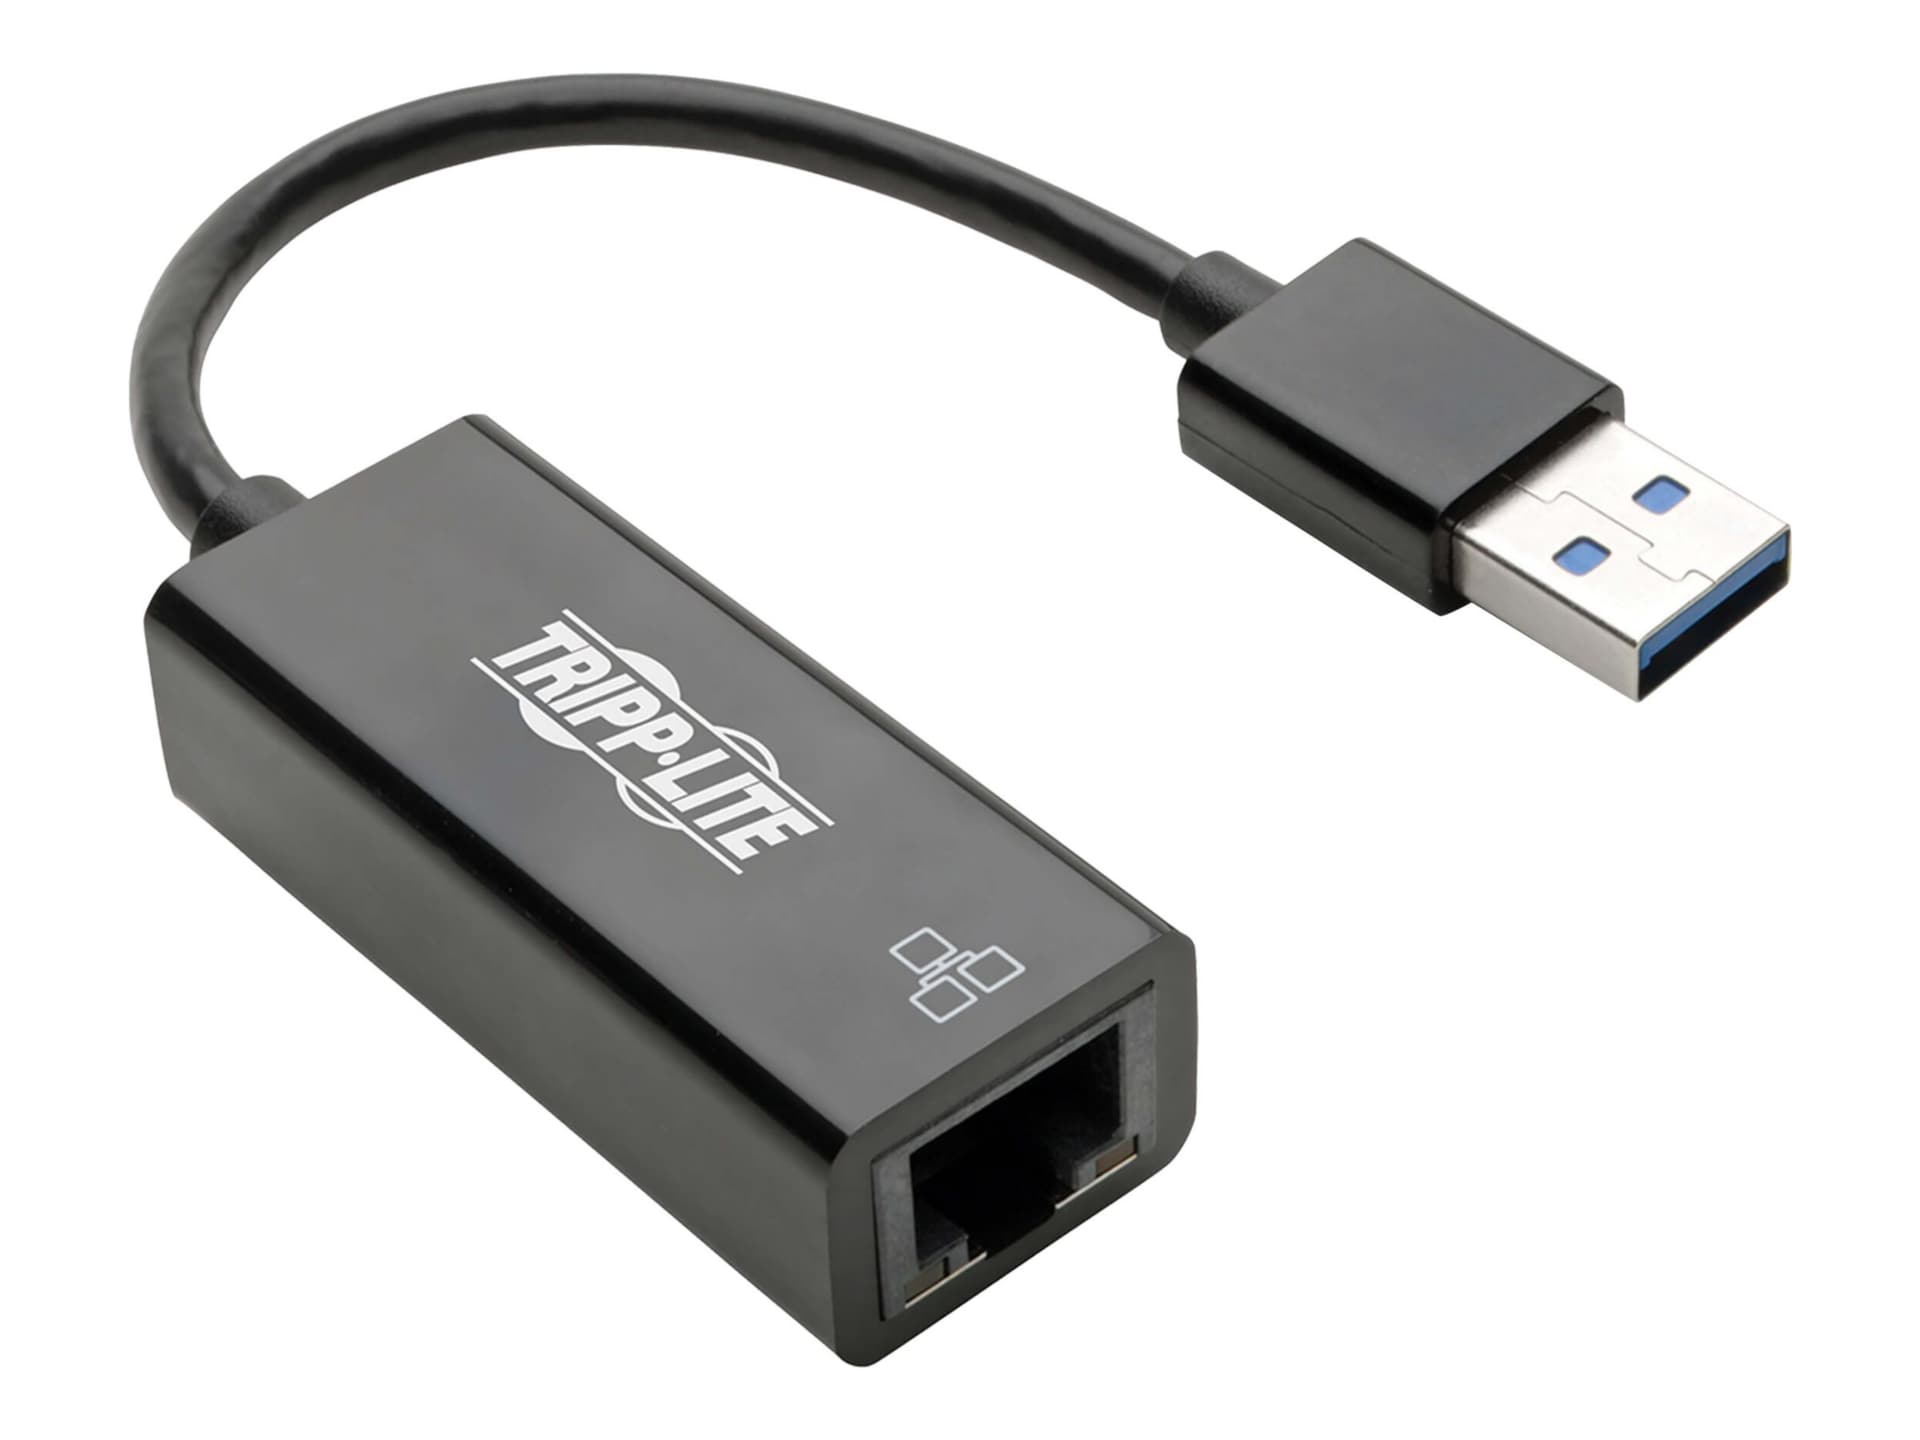 Eaton Tripp Lite Series USB 3.0 SuperSpeed to Gigabit Ethernet Adapter RJ45 10/100/1000 Mbps - network adapter - USB 3.0